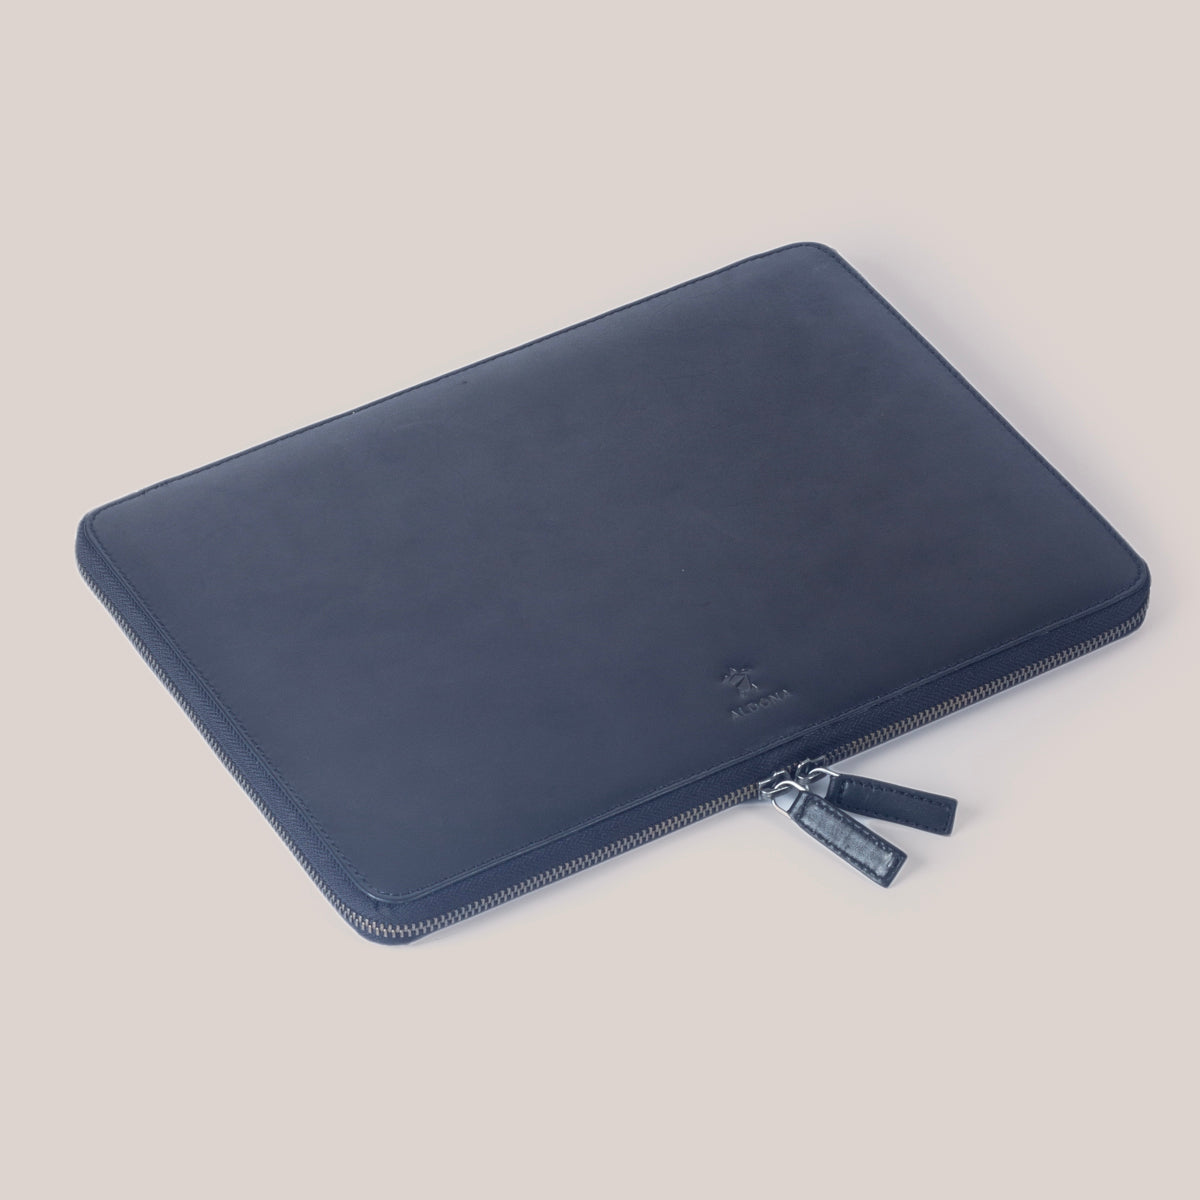 Microsoft Surface Book 13.5 Zippered Laptop Case - Onyx Black